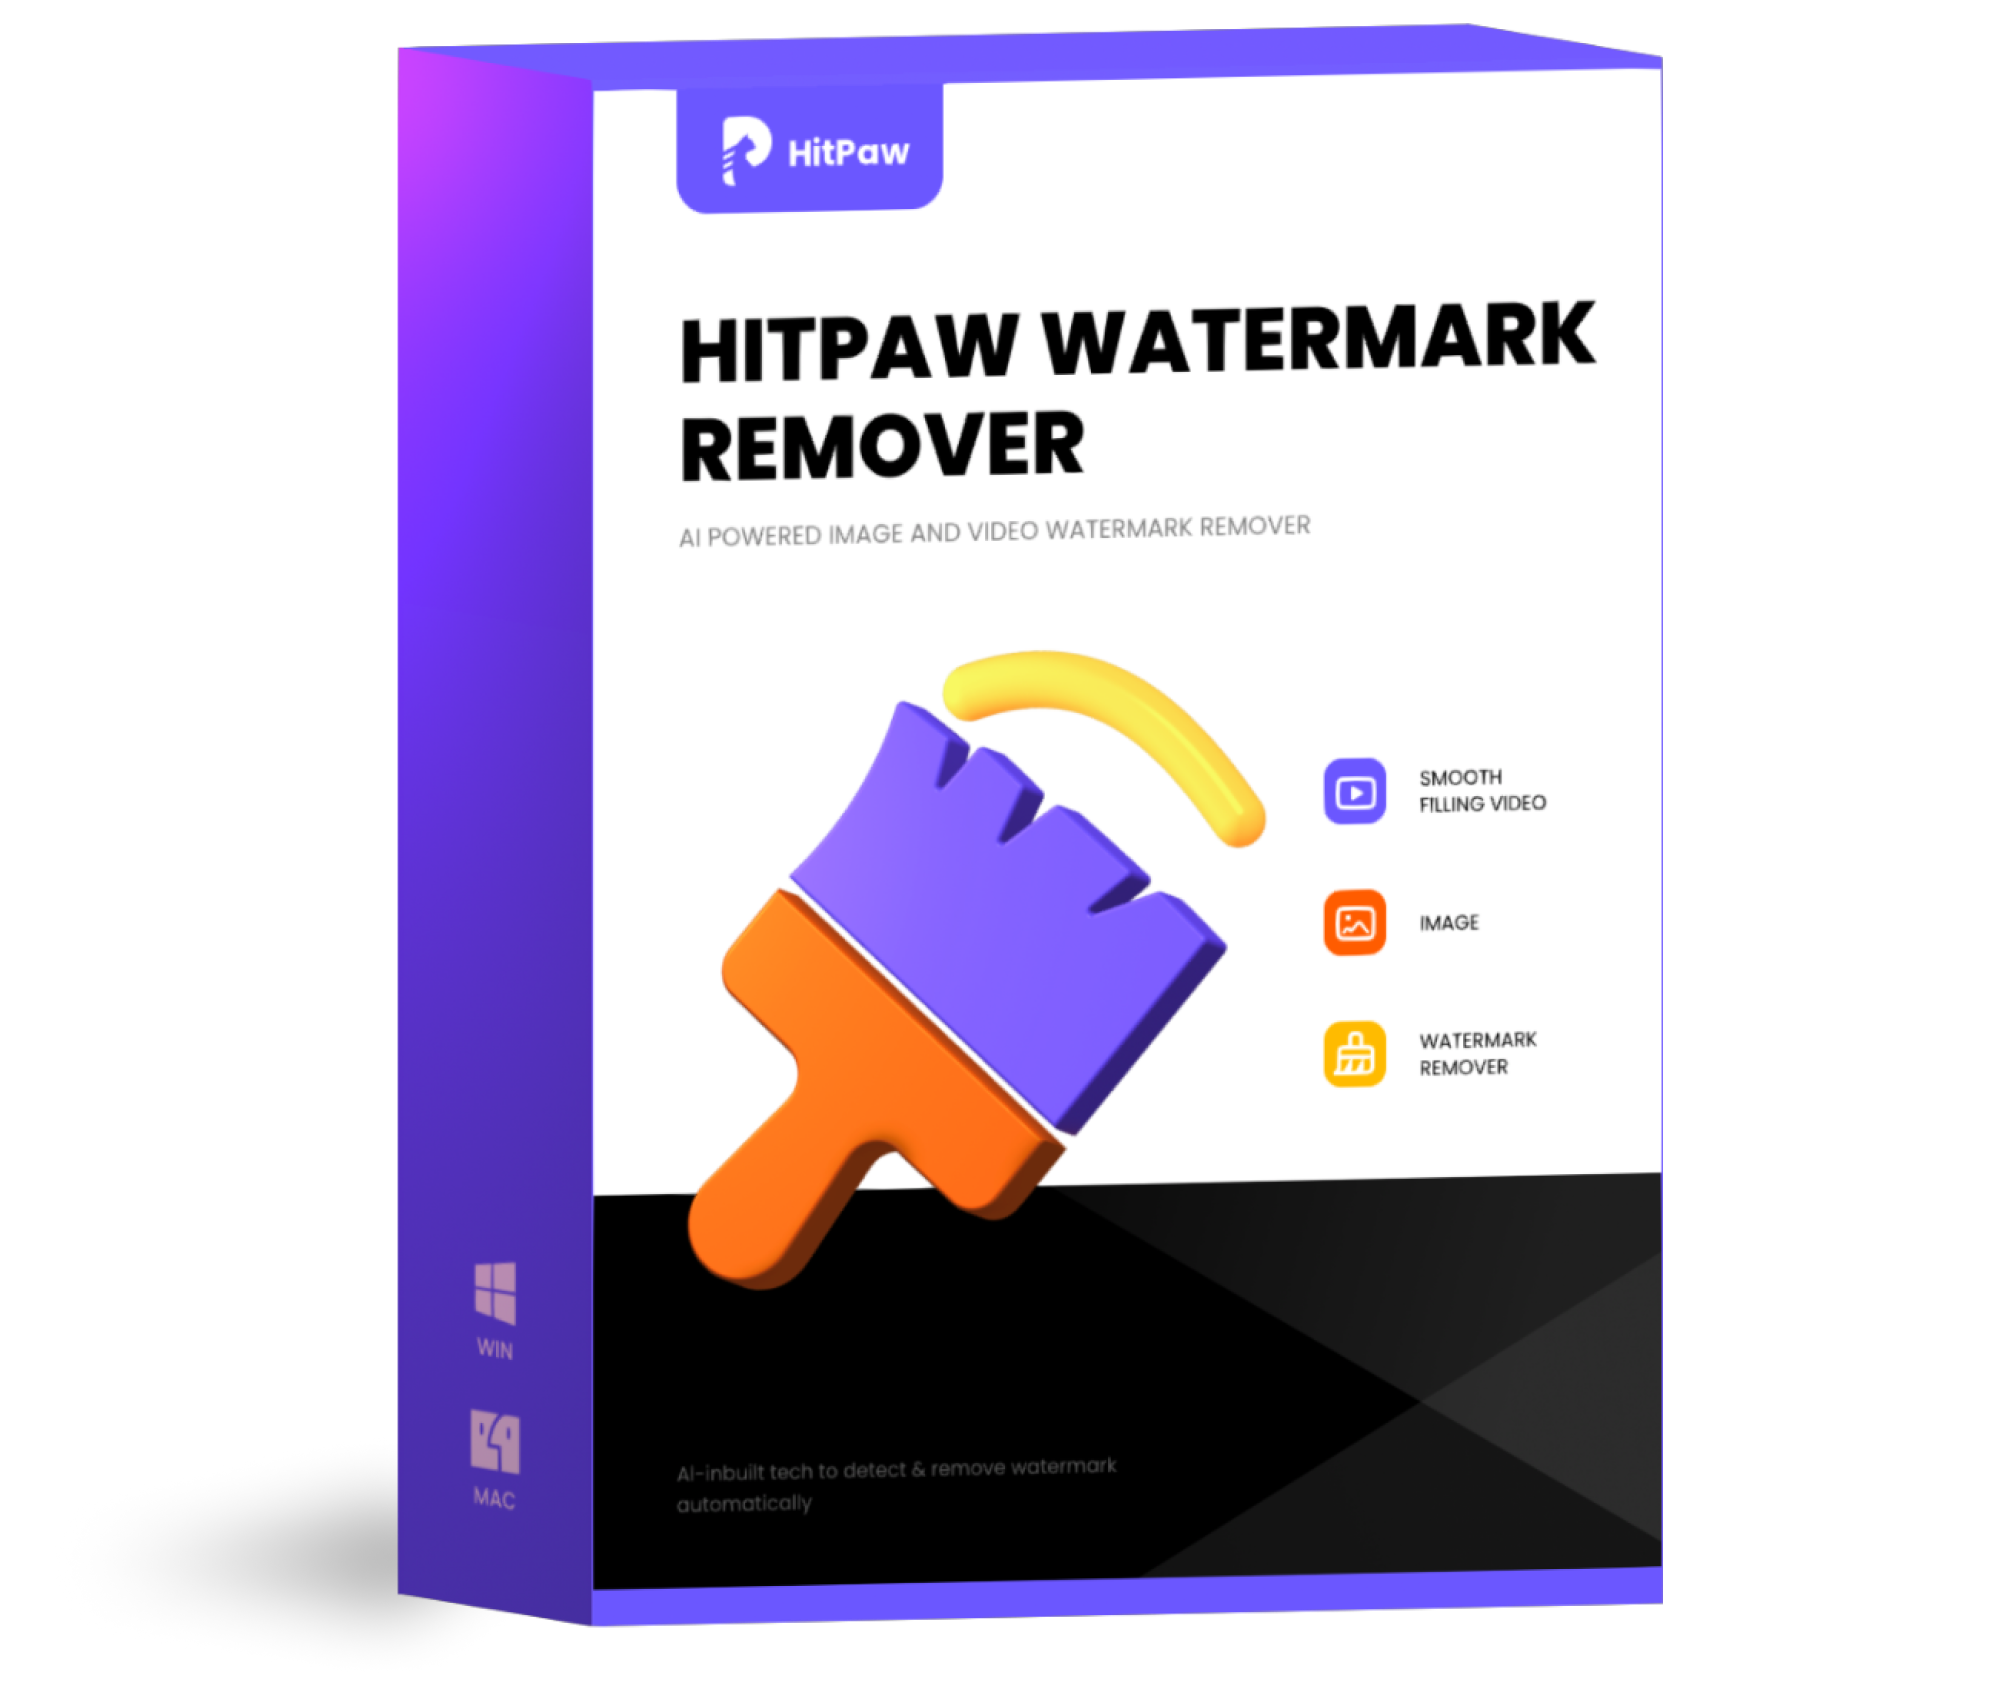 hitpaw watermark remover app